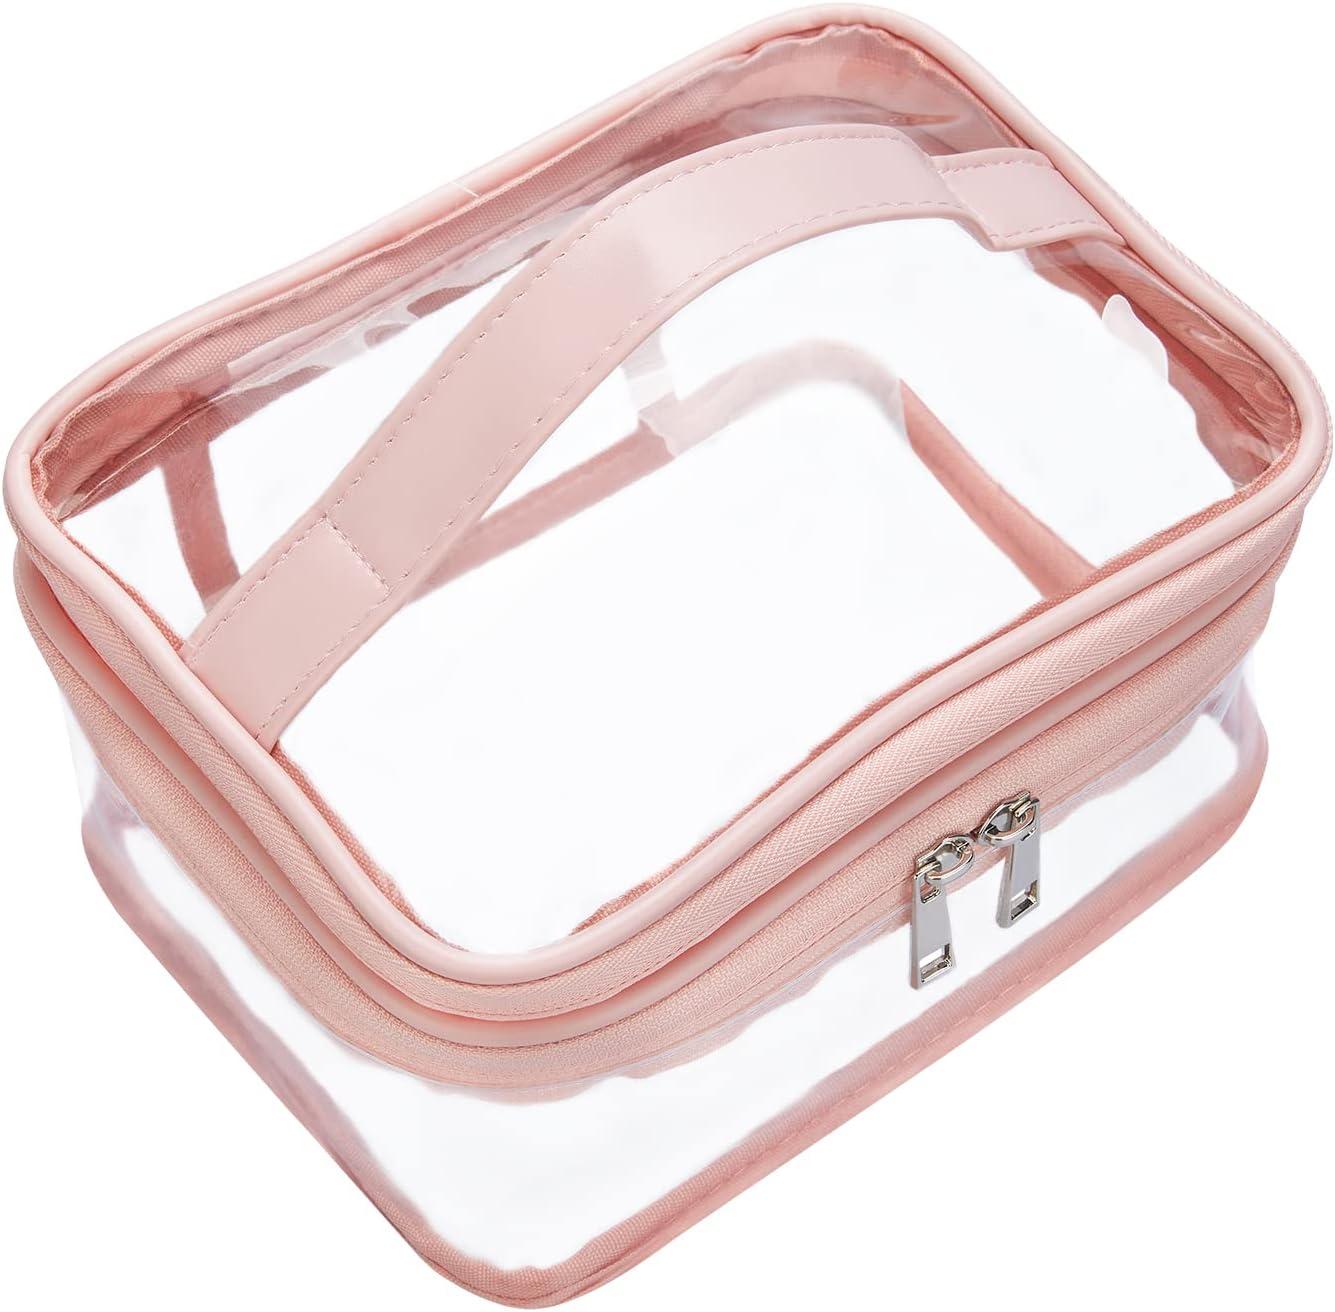 Plastic Clear Jewelry Bag with Zipper, Customize Logo - China PVC,  Transparent Bag